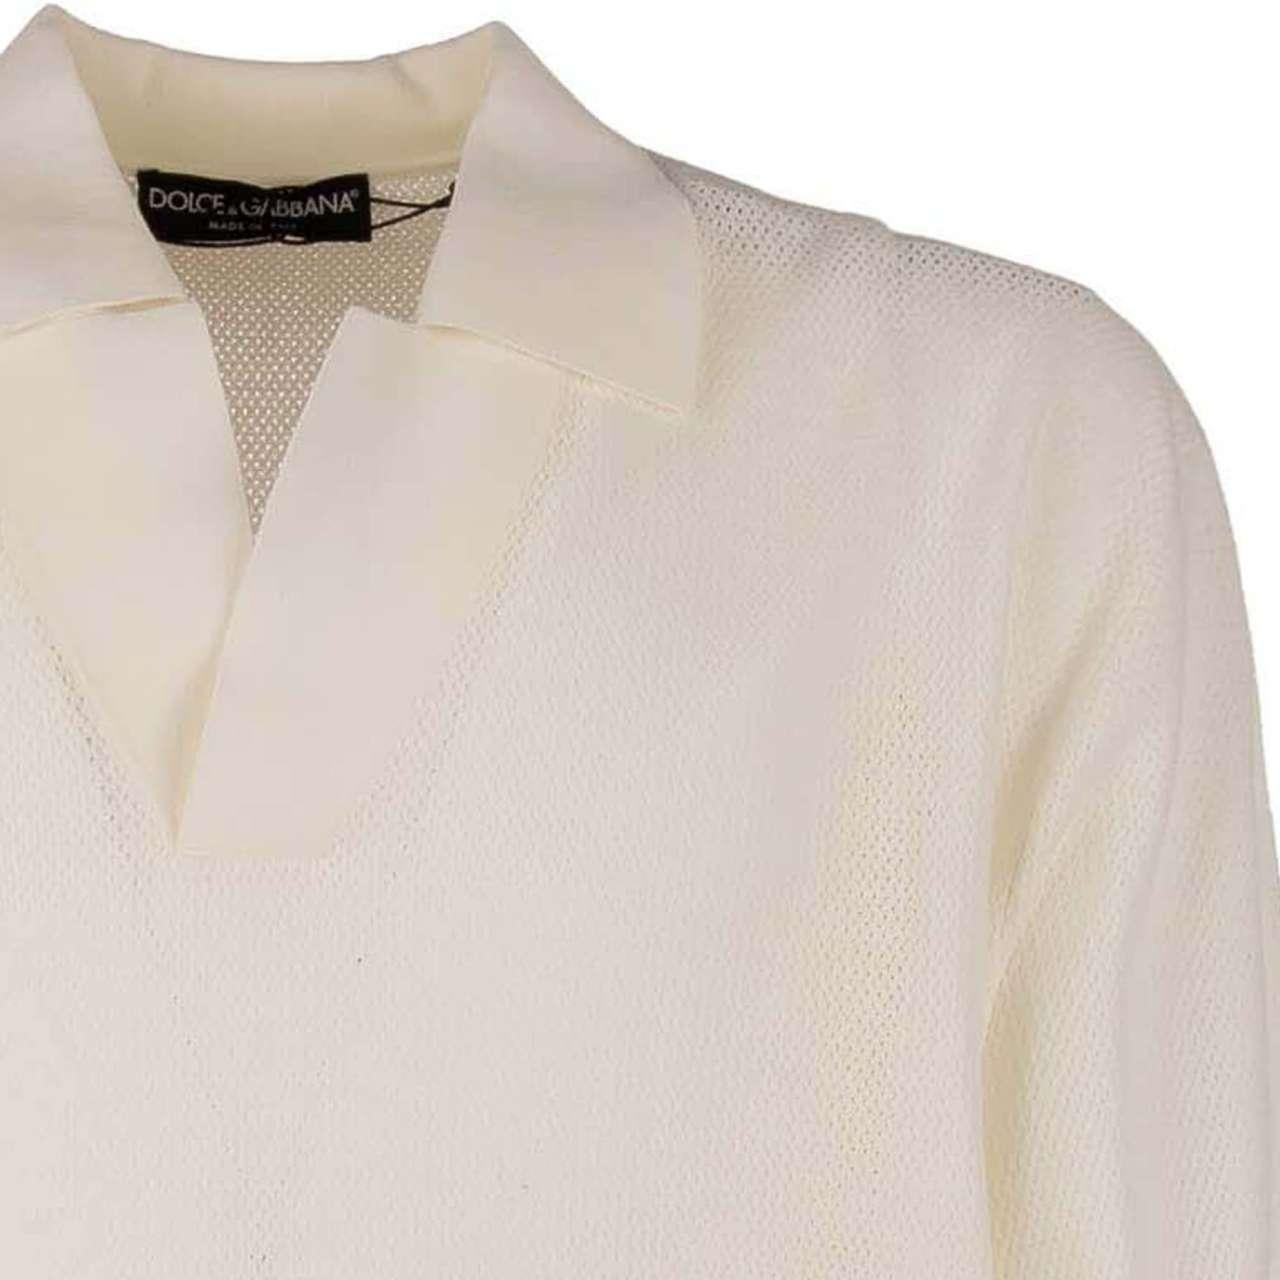 Dolce & Gabbana - Light Cotton Polo Shirt T-Shirt White 58 In Excellent Condition For Sale In Erkrath, DE